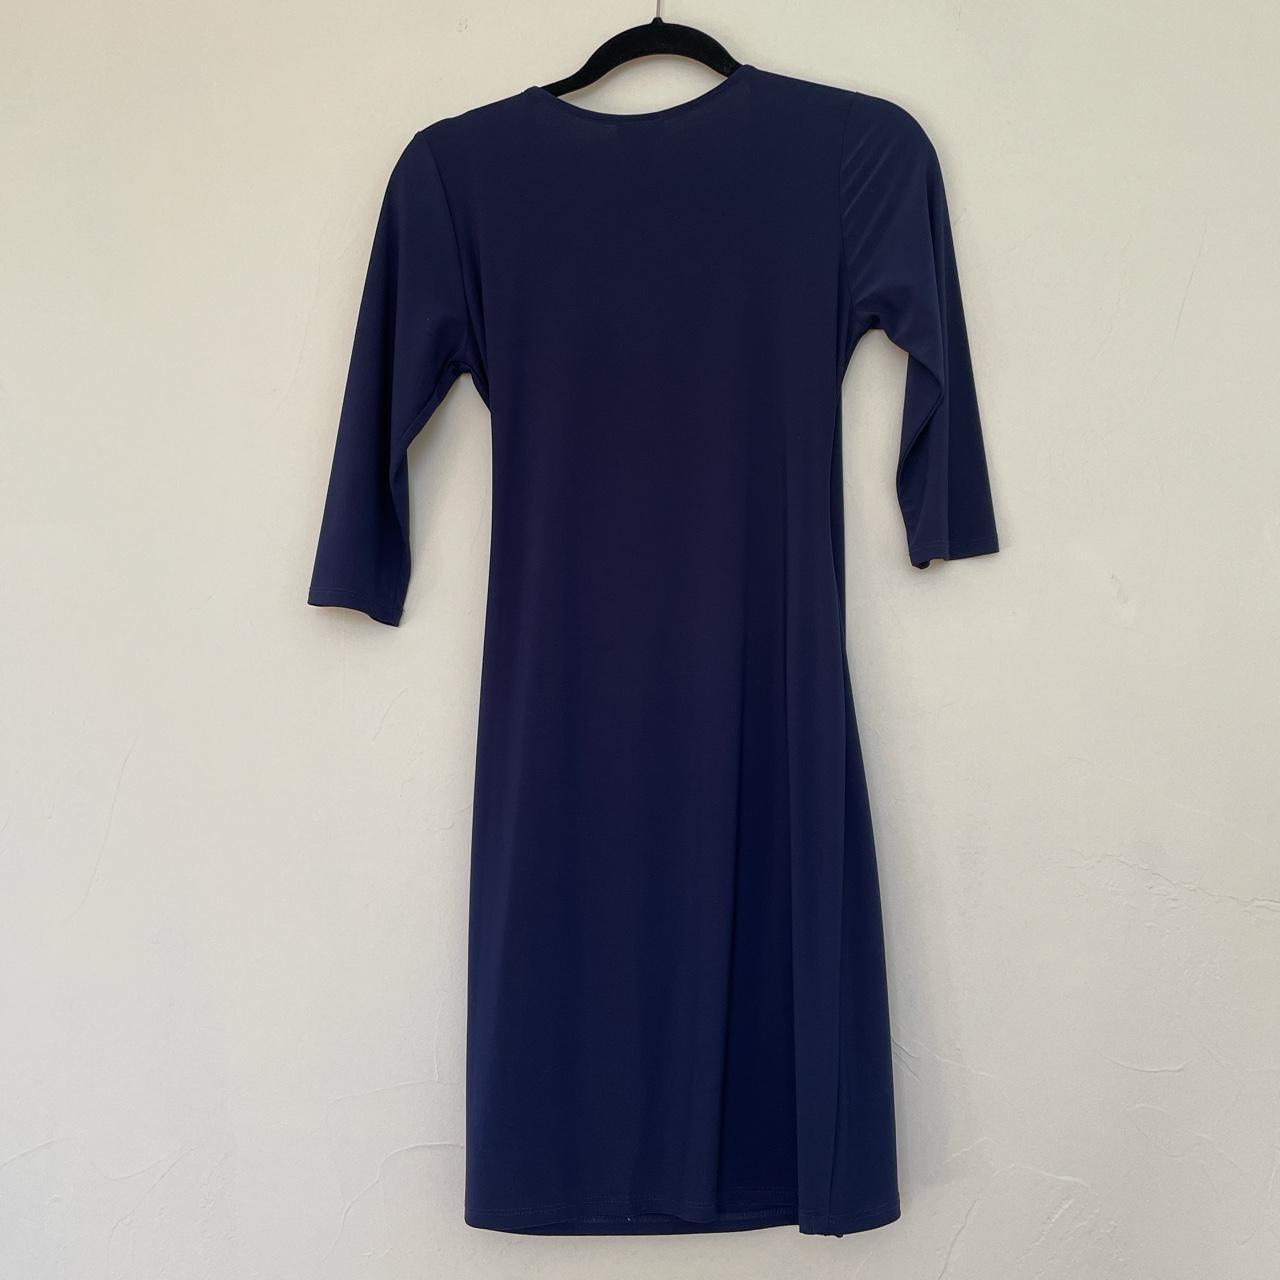 Product Image 3 - Navy/Dark blue mini wrap dress.